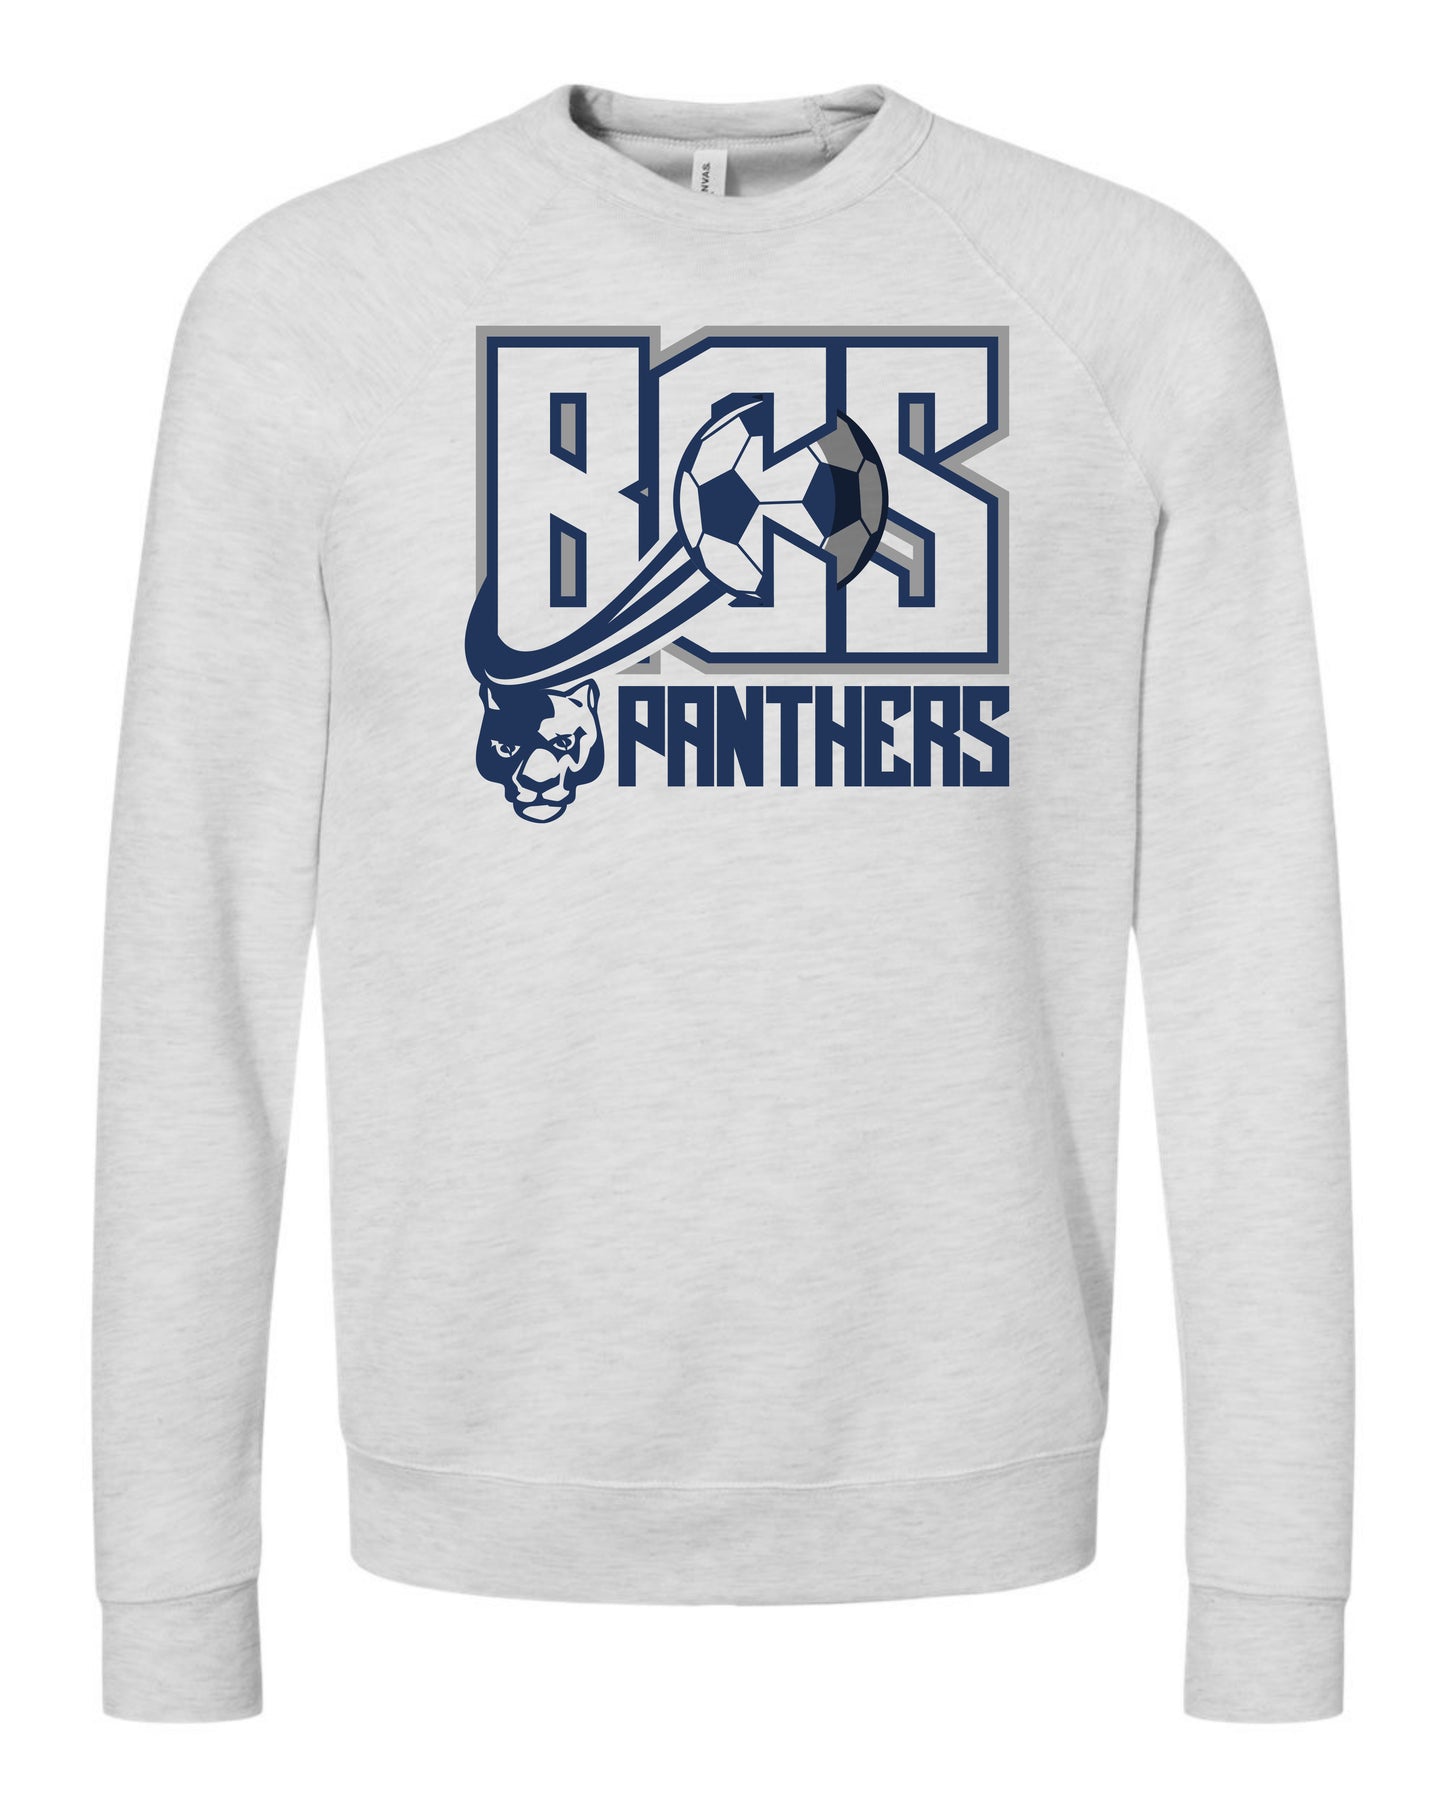 BCS Panthers Ball Fly Thru - Adult Sweatshirt